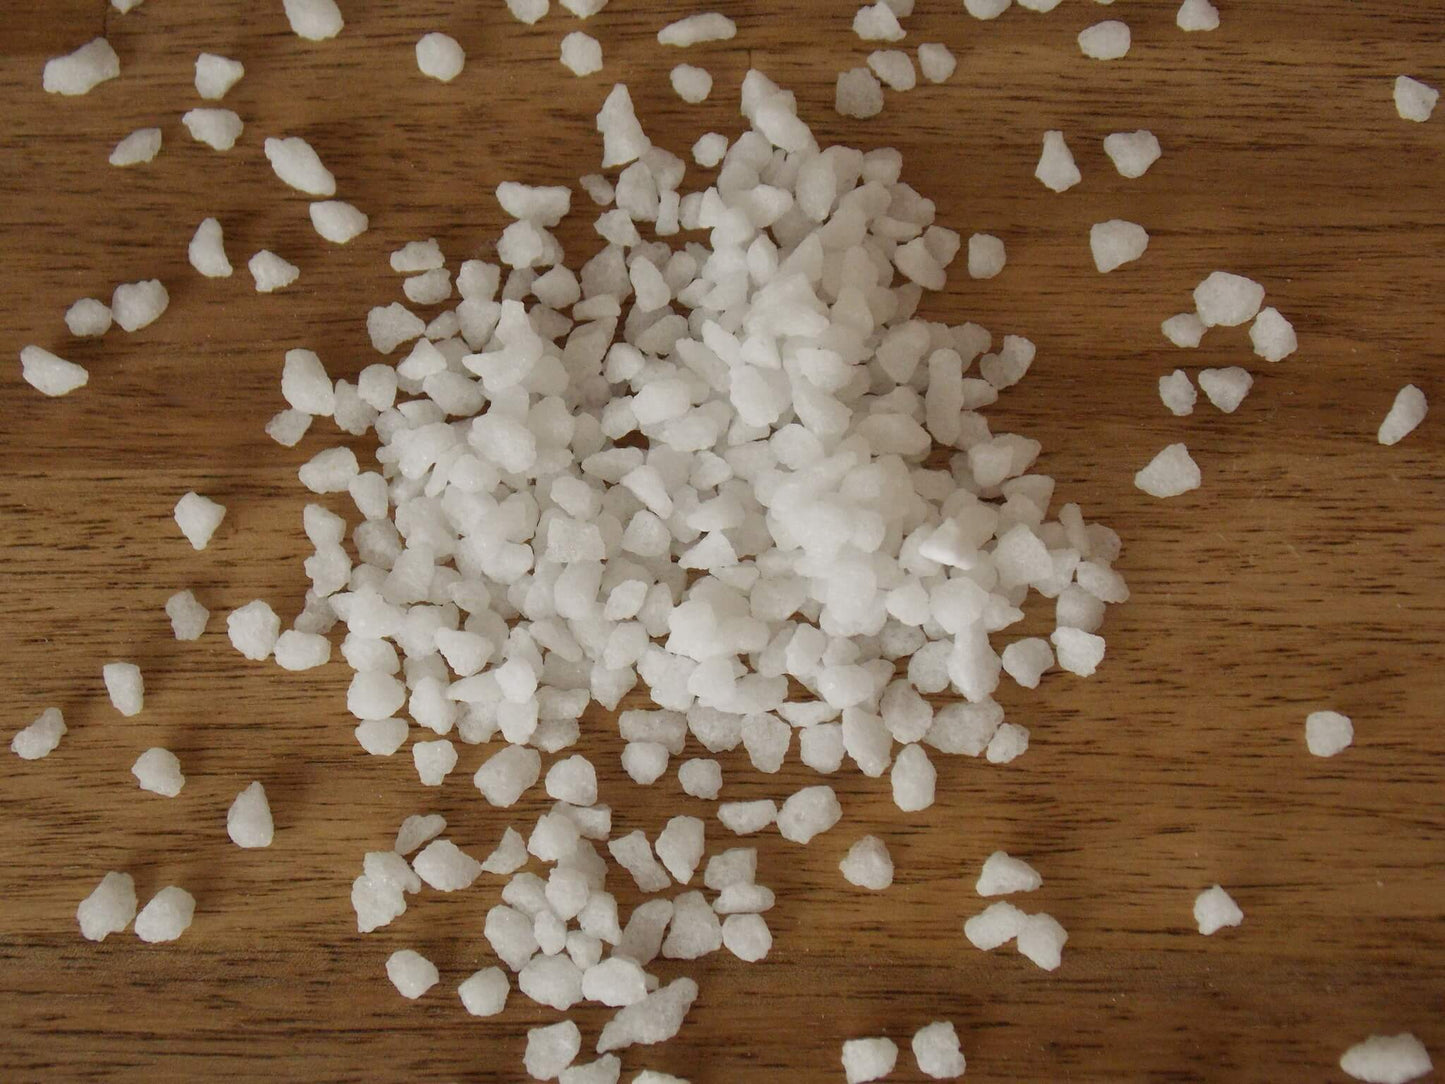 Hail sugar / pearl sugar/ nib sugar (3.2mm-5.6mm)